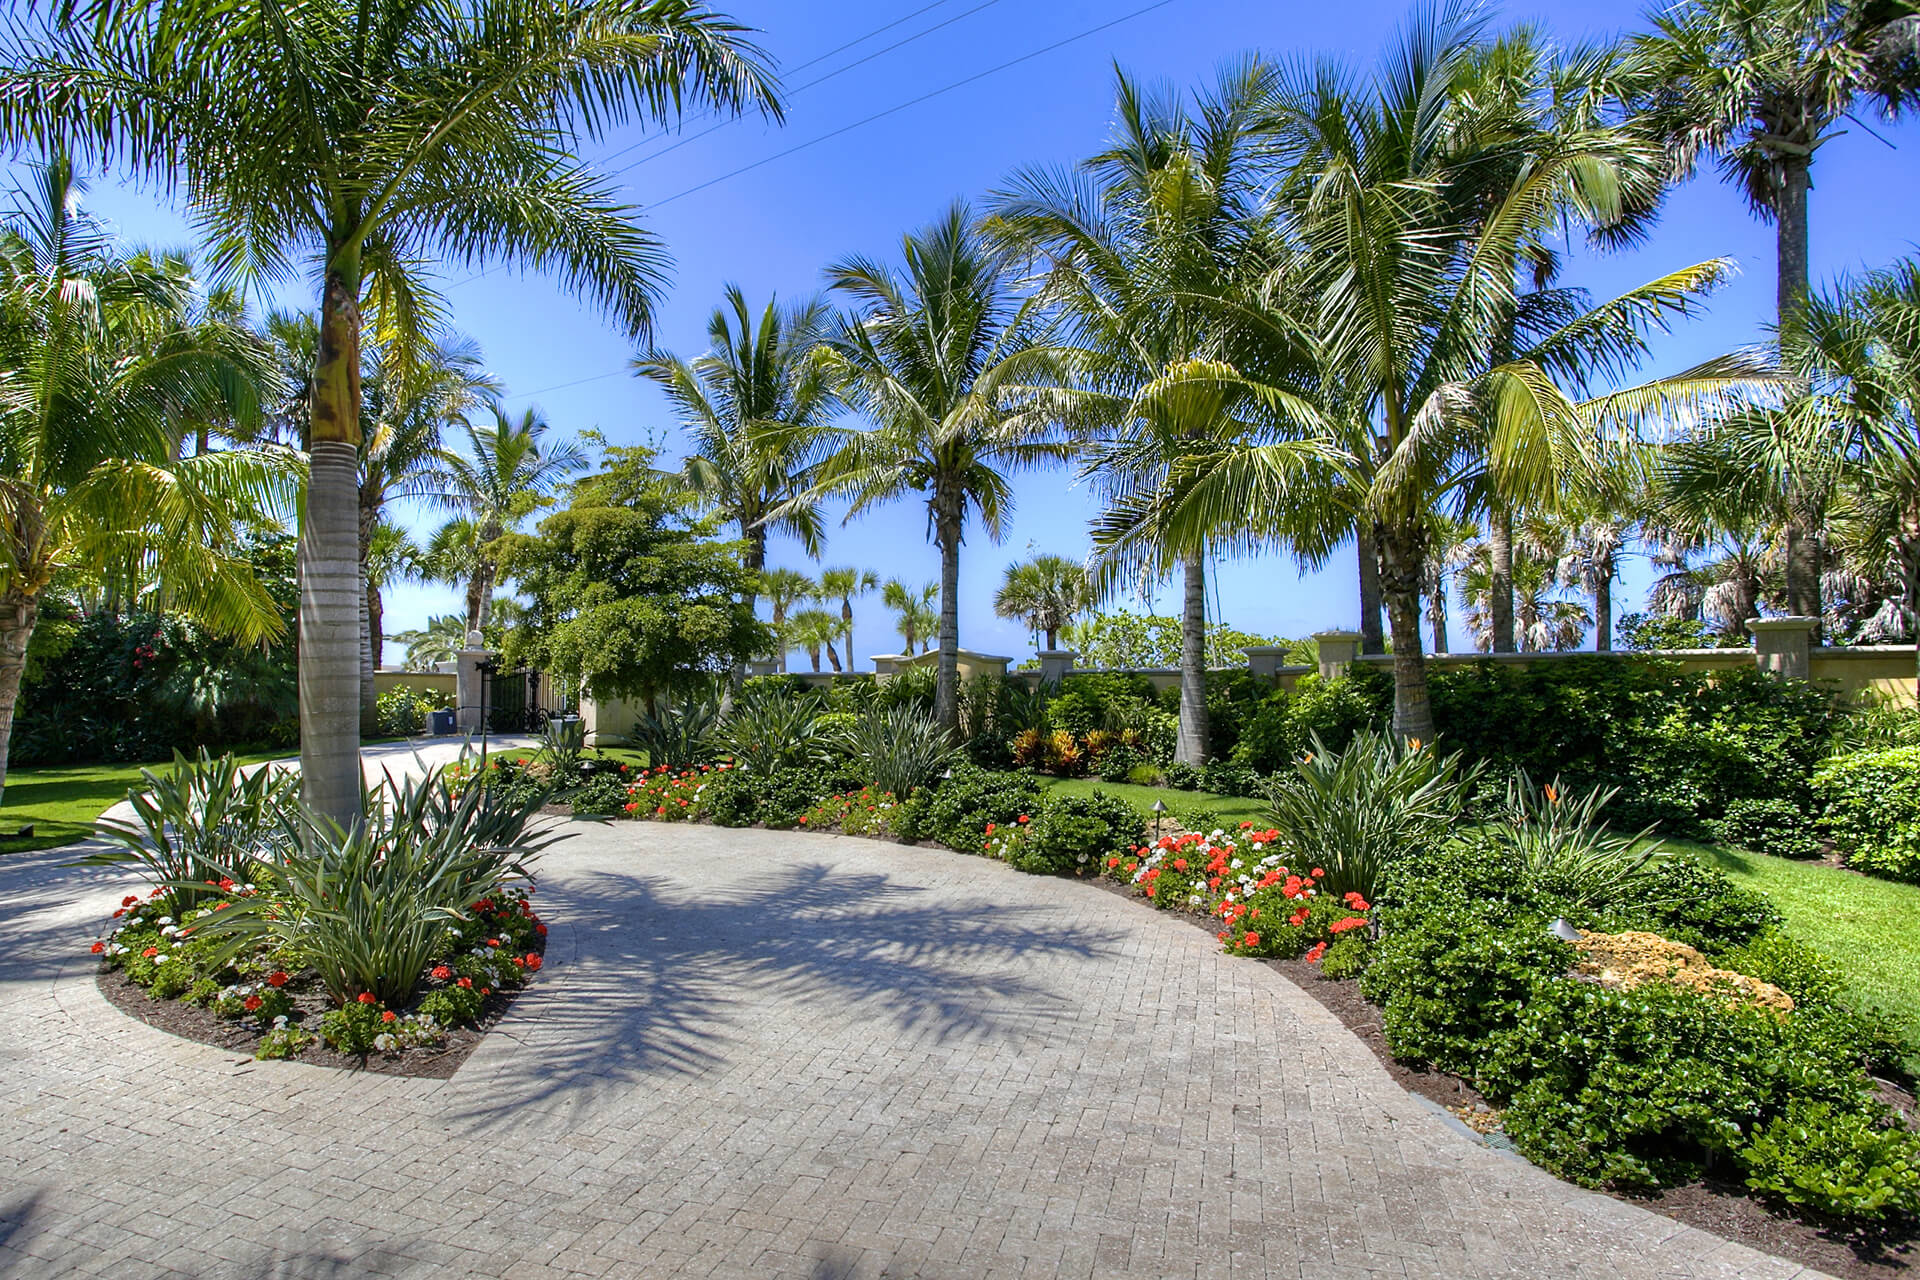 Landscape design & installation-Ornelas Landscape Design in Florida